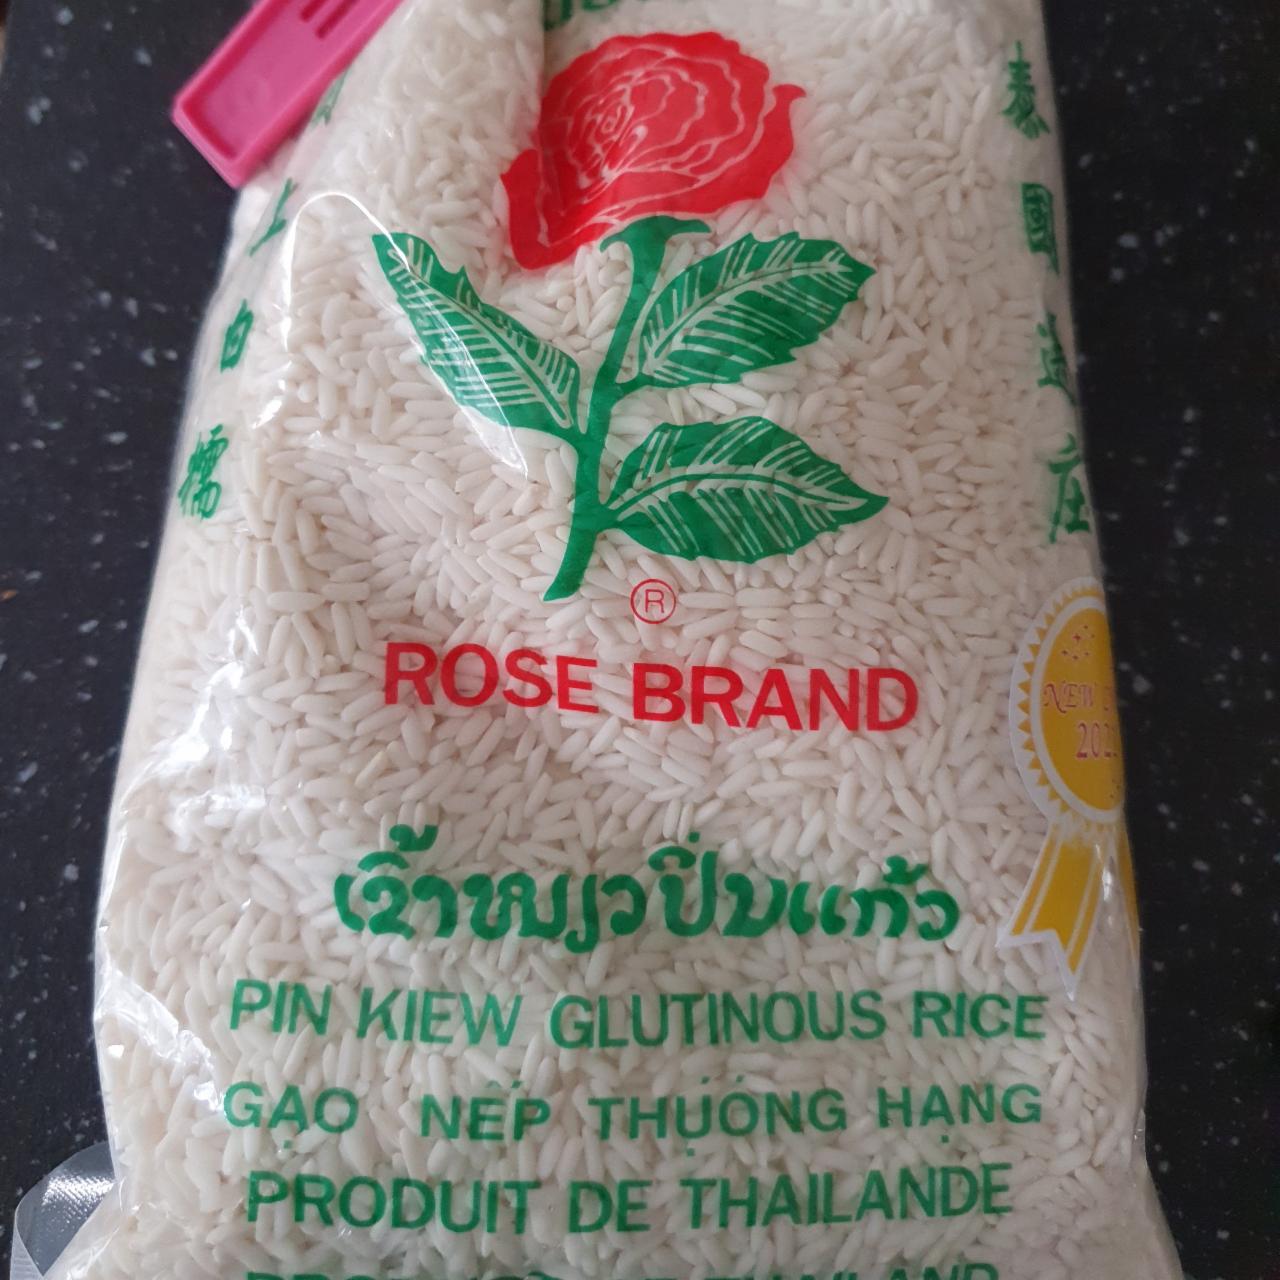 Fotografie - Pin Kiew Glutinous Rice Rose Brand